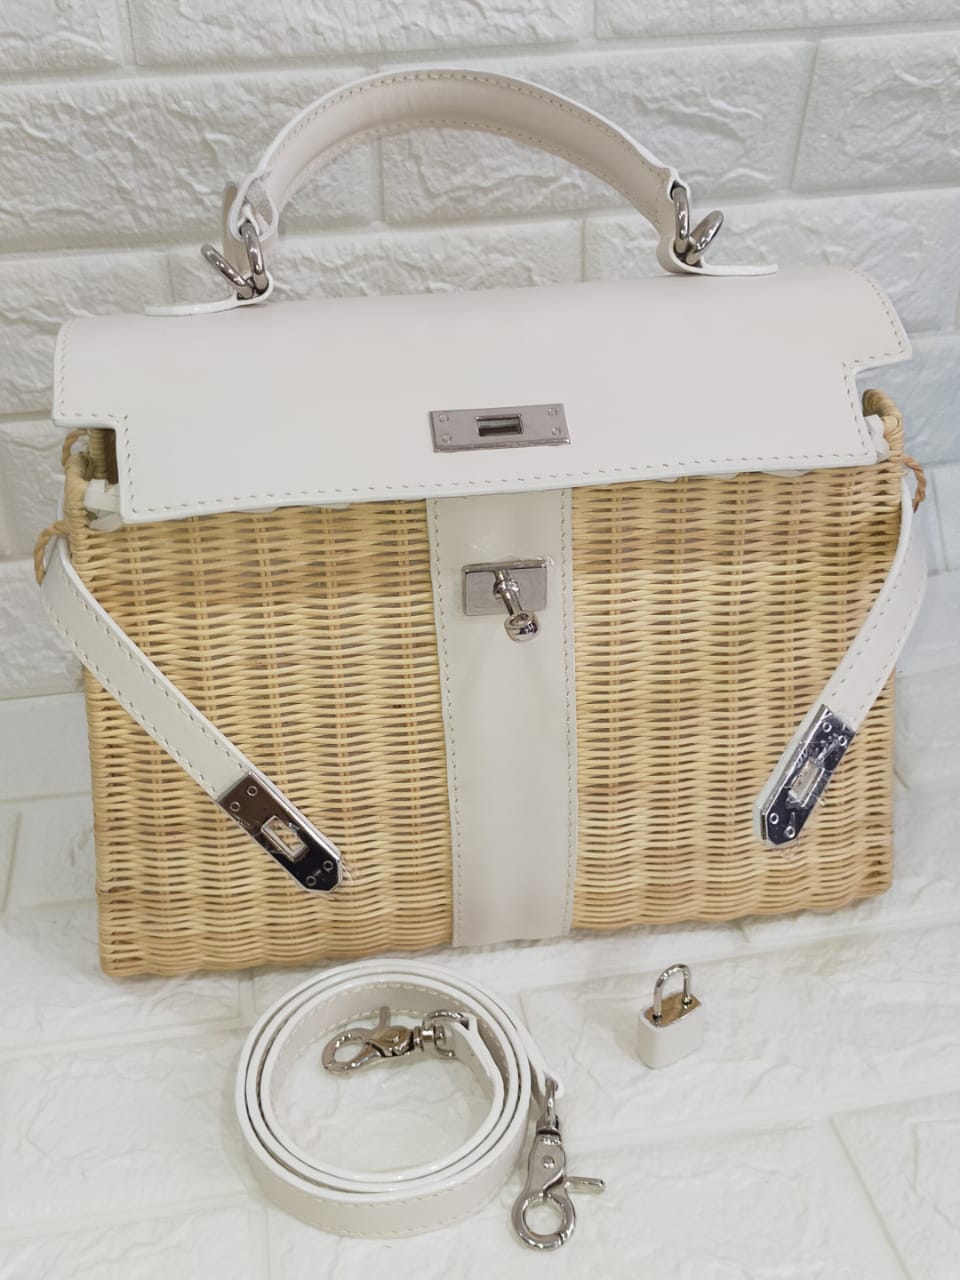 CLEARANCE SALE ! White genuine leather - Handmade wicker bag, Medium size (31cm)